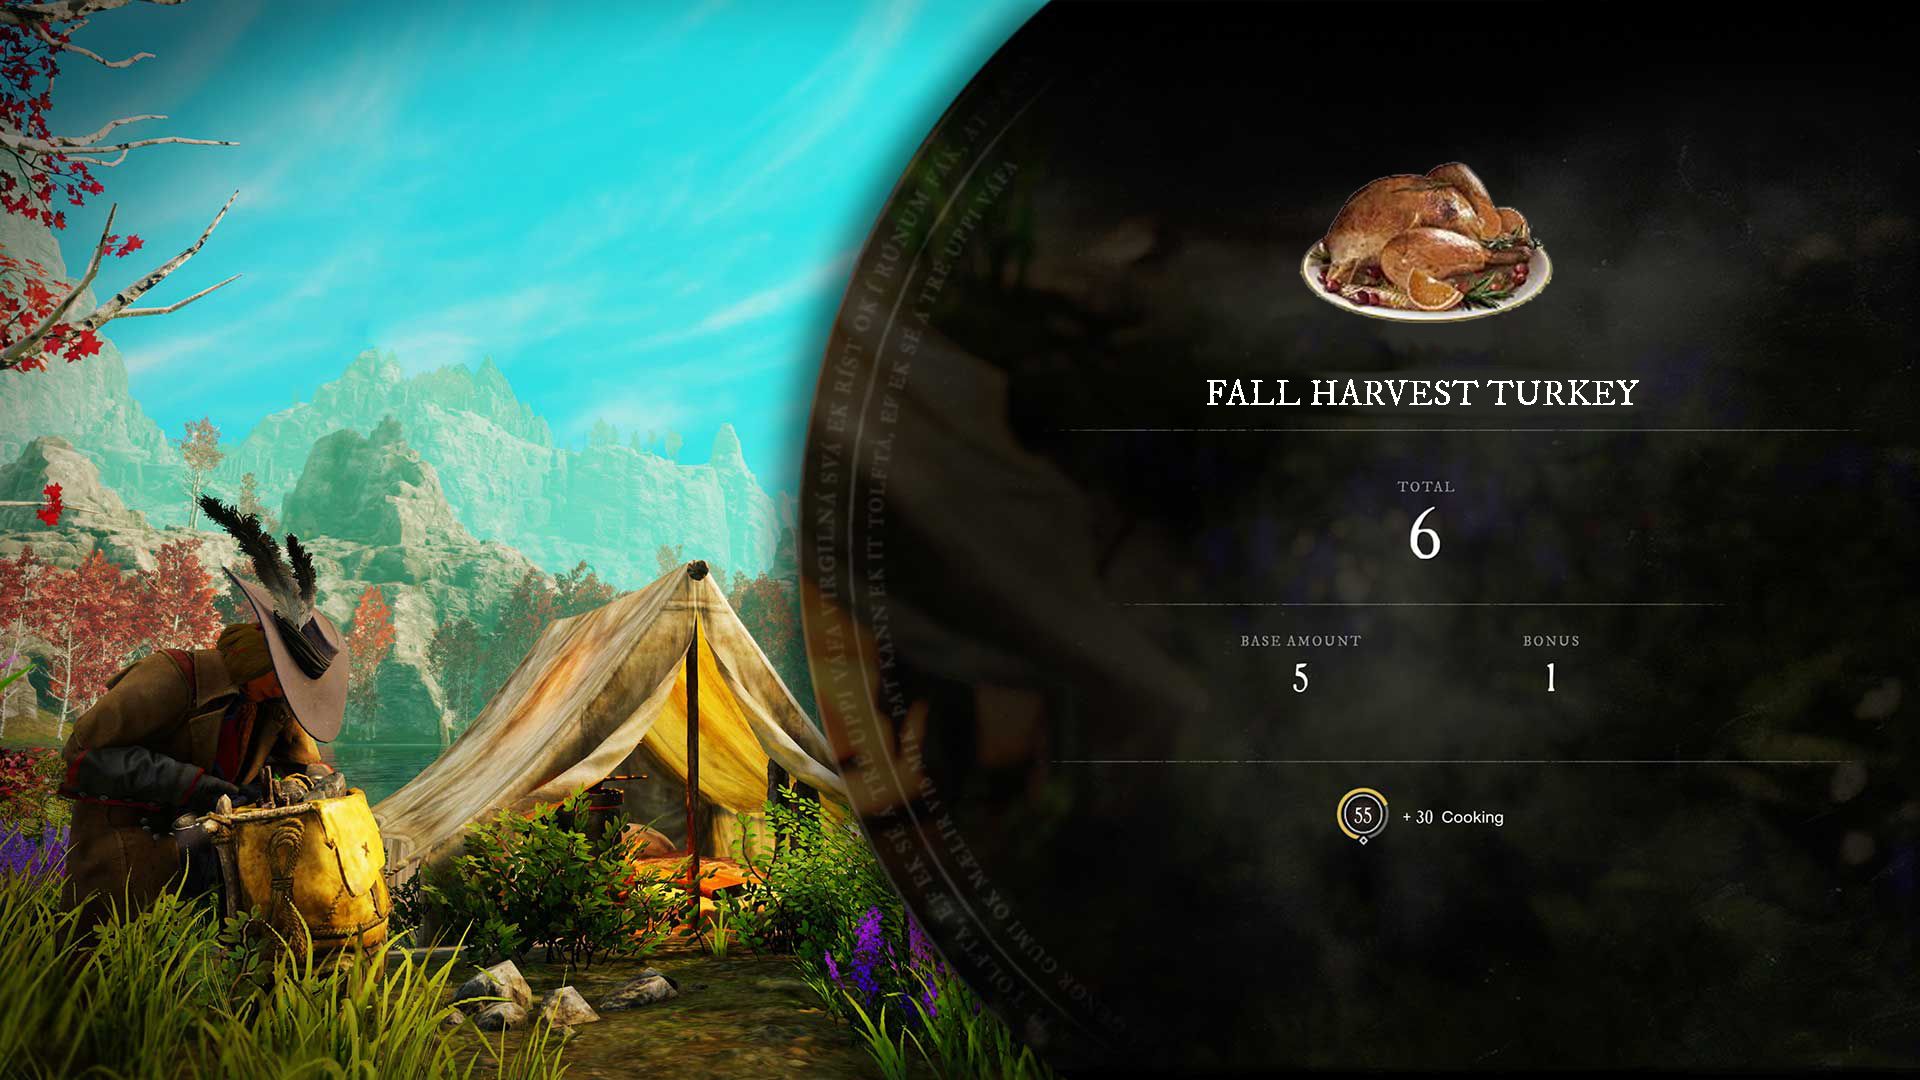 A player cooks a Fall Harvest Turkey recipe at a campsite